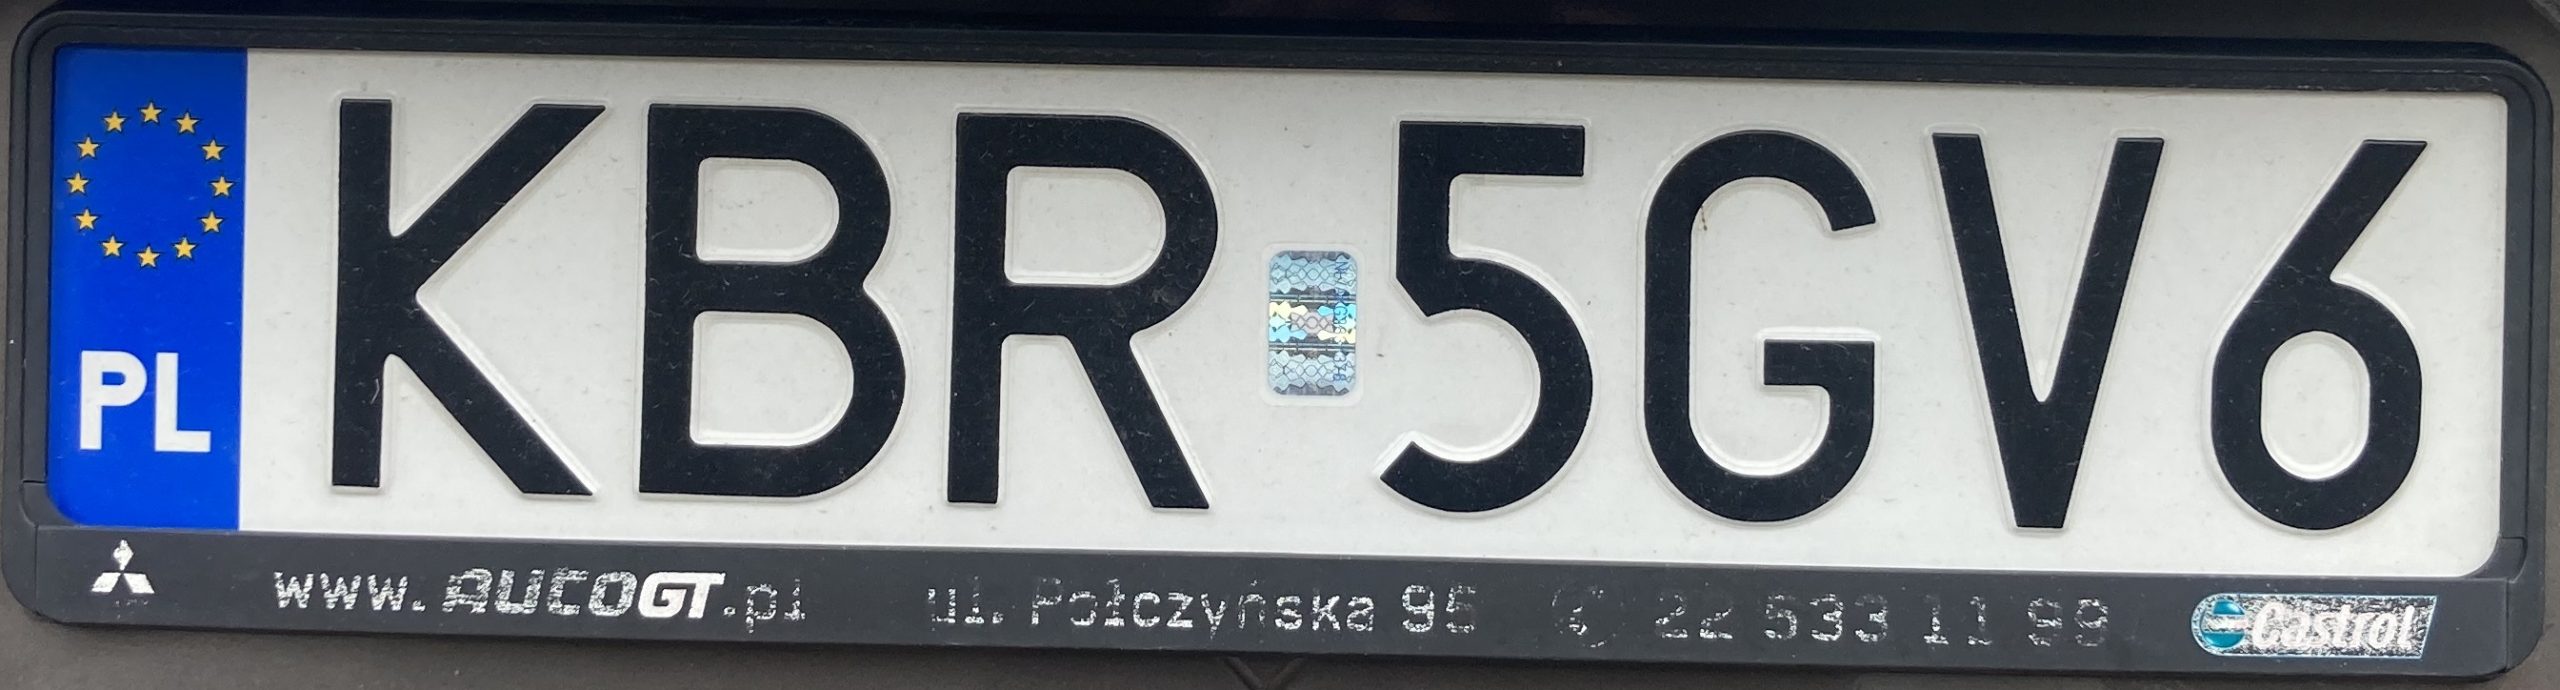 Registrační značka Polsko – KBR - Brzesko, foto: www.podalnici.cz